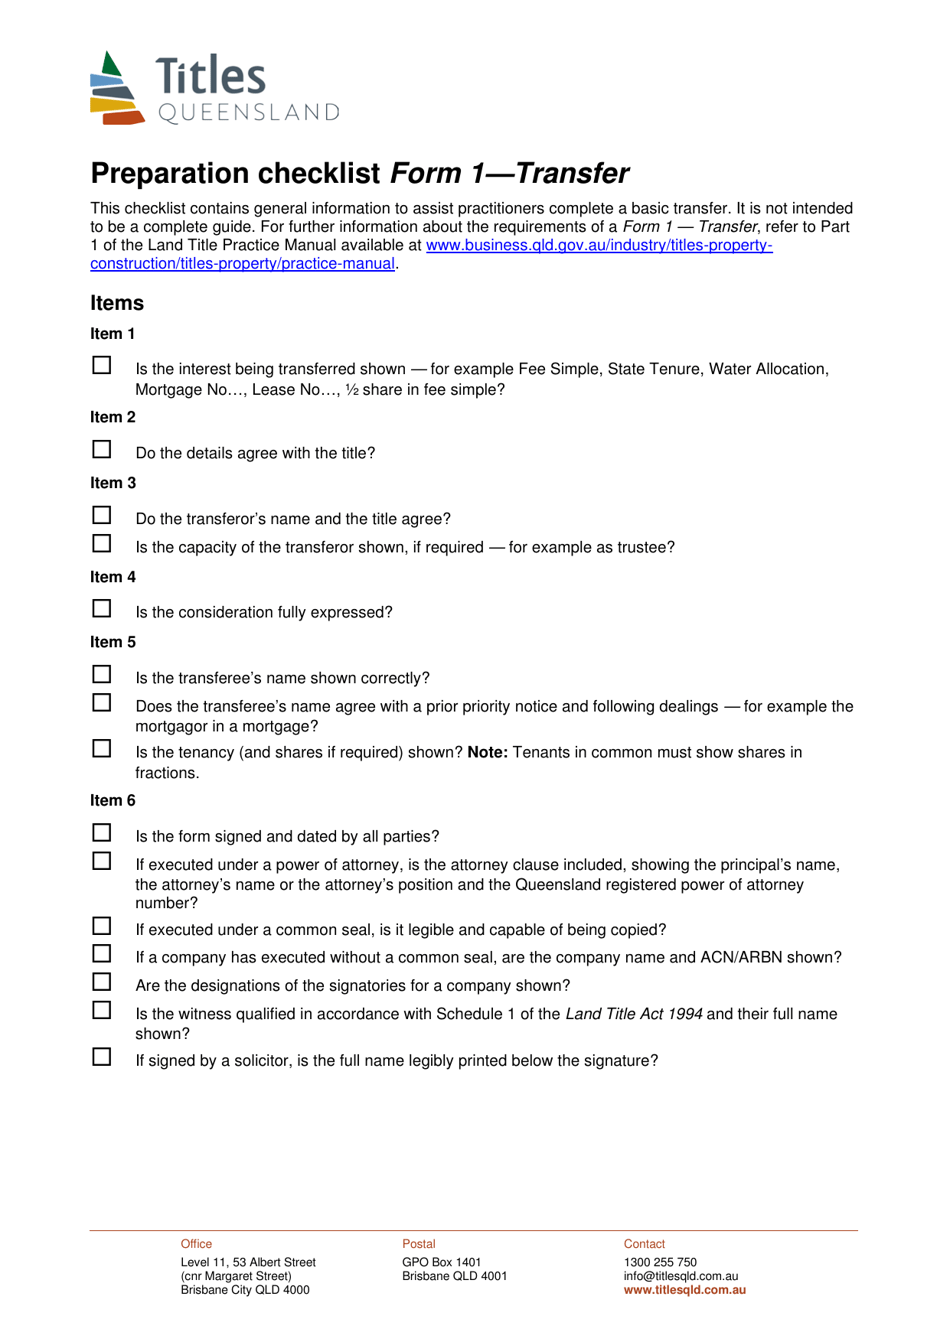 Form 1 Preparation Checklist - Transfer - Queensland, Australia, Page 1